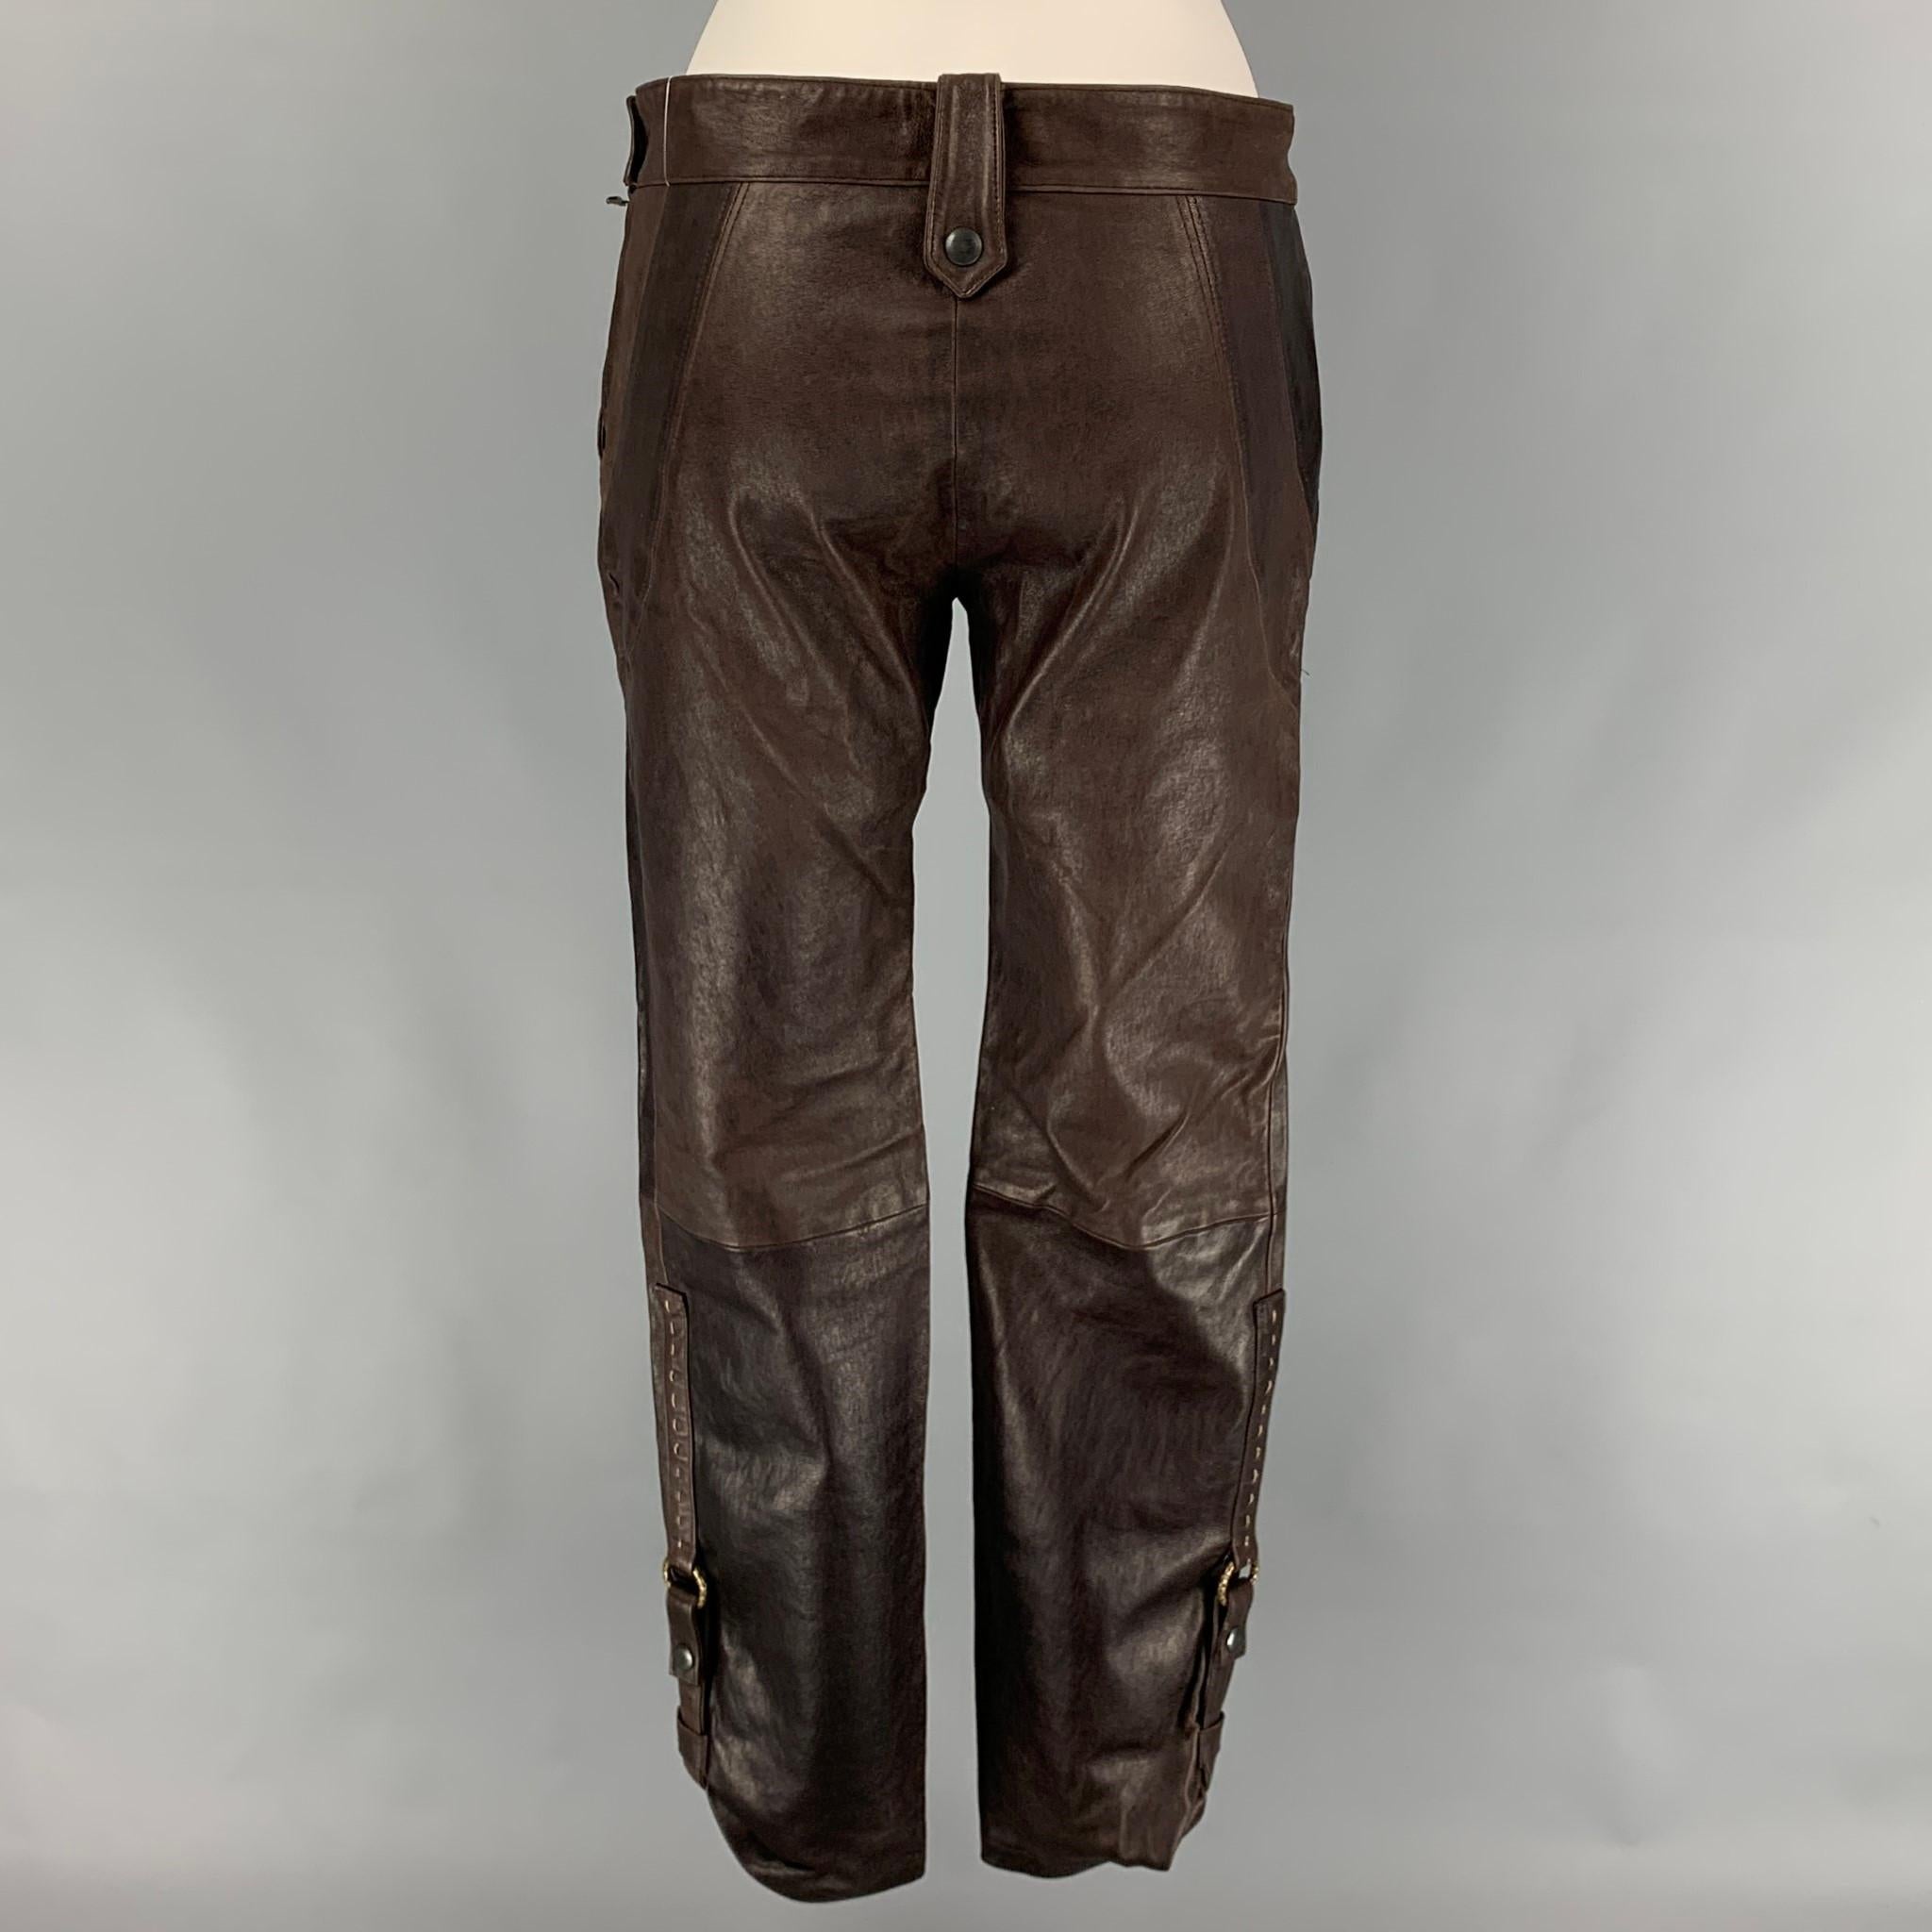 Black HENRY BEGUELIN Size 6 Brown Leather Contrast Stitch Dress Pants